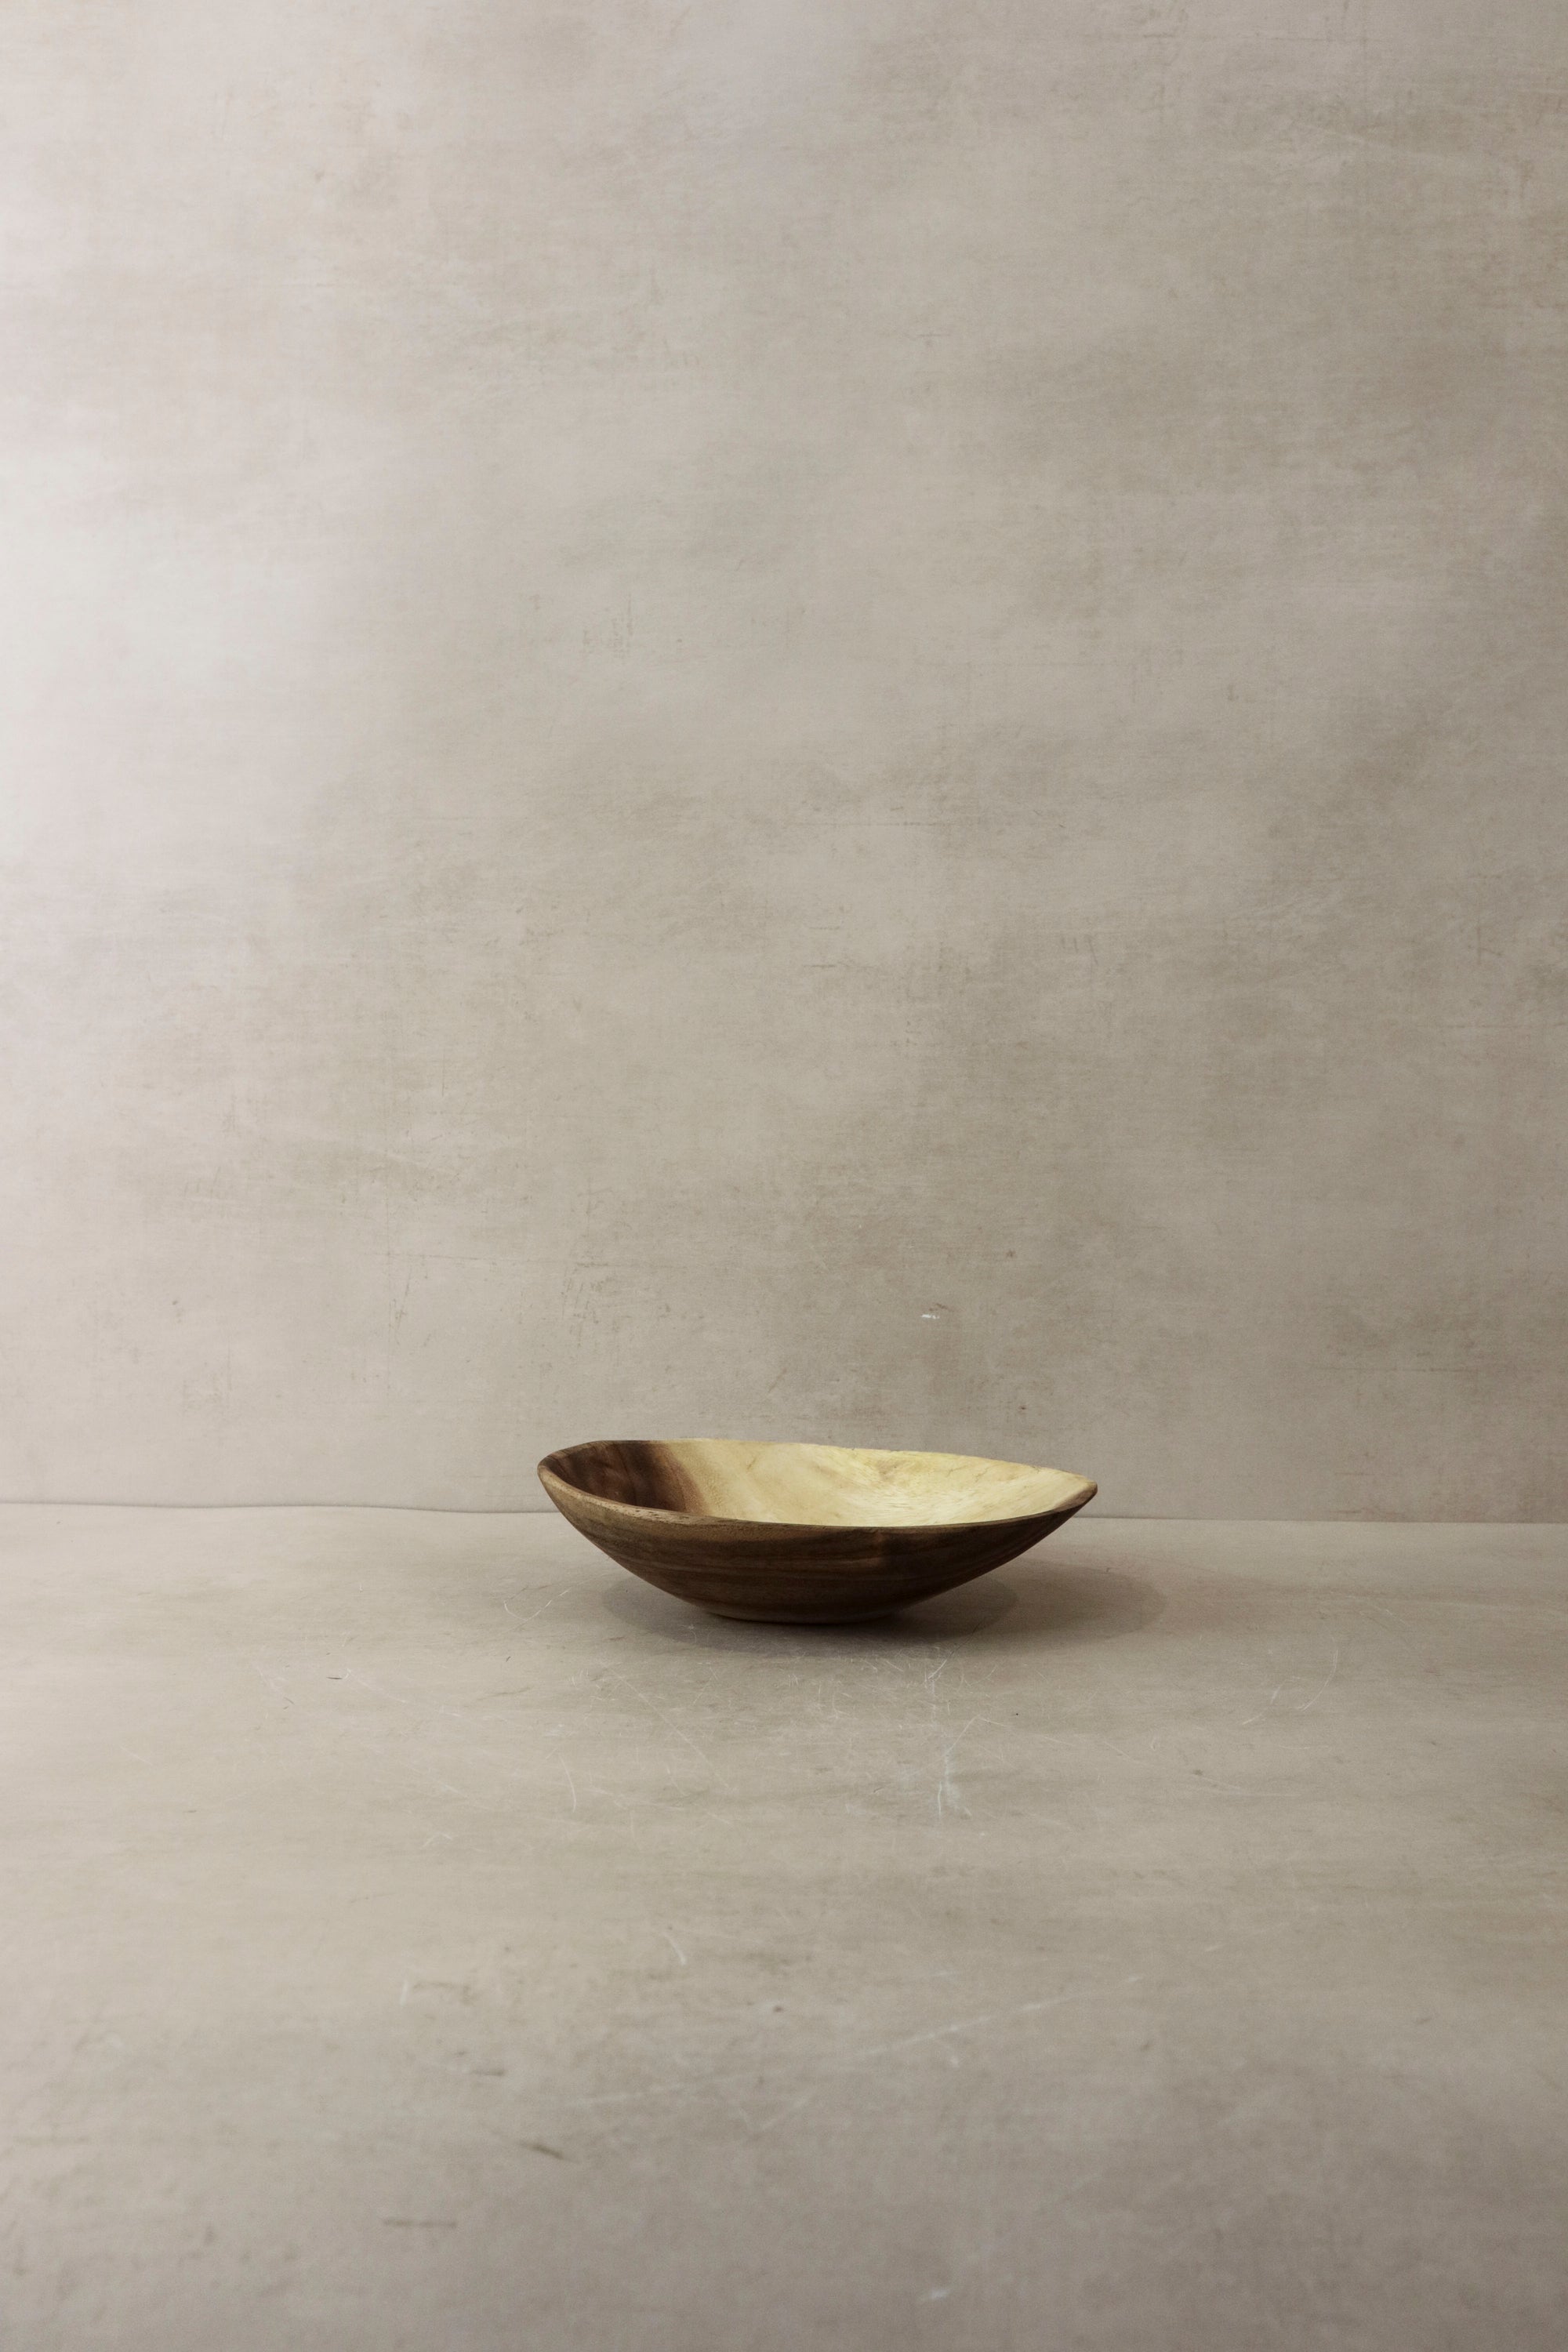 Handmade wooden bowl, Zimbabwe - 12.3